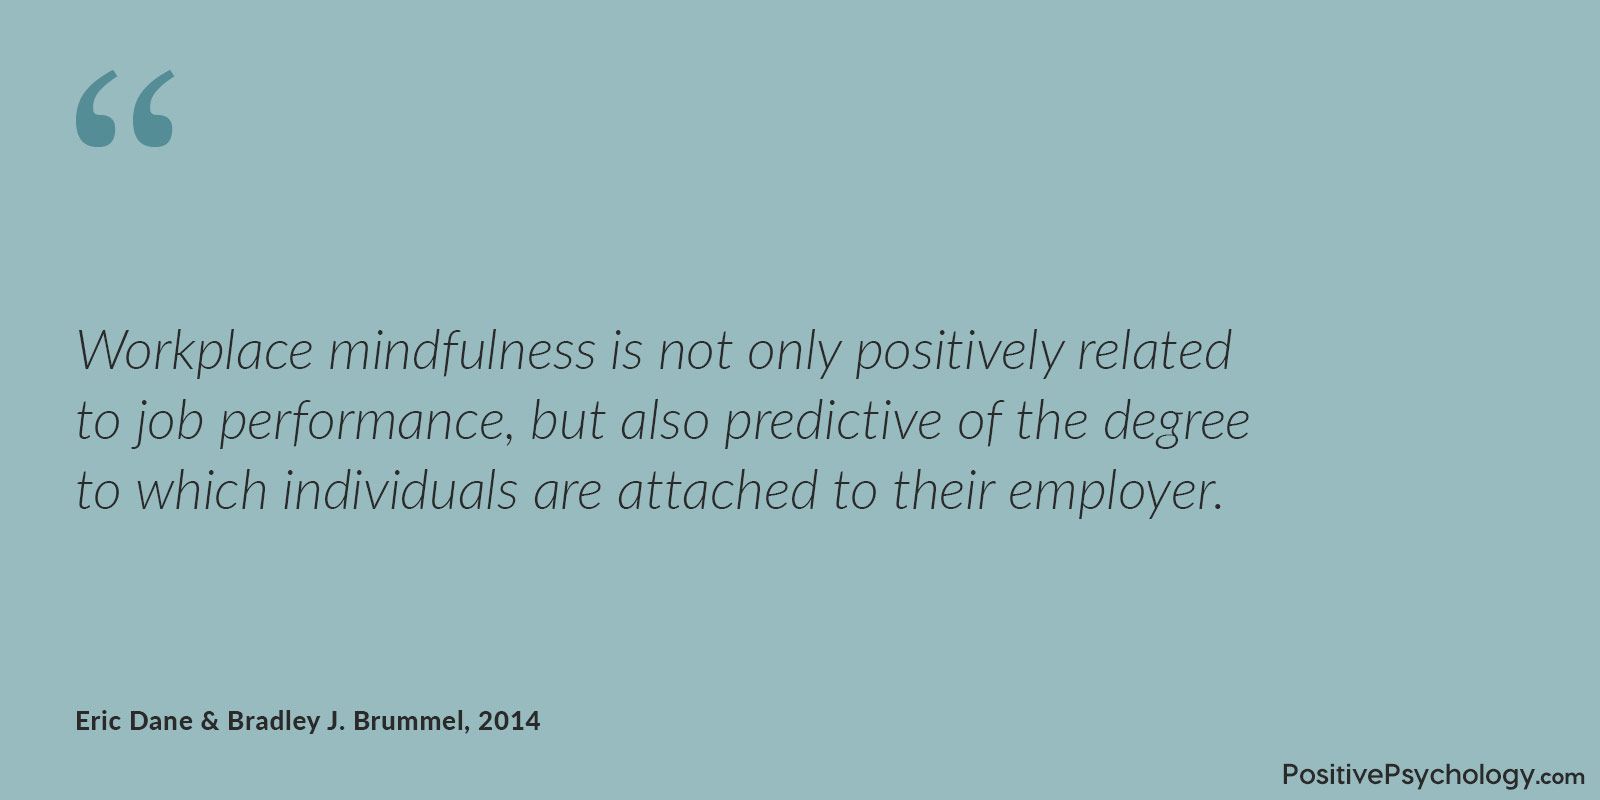 Workplace mindfulness improves job performance